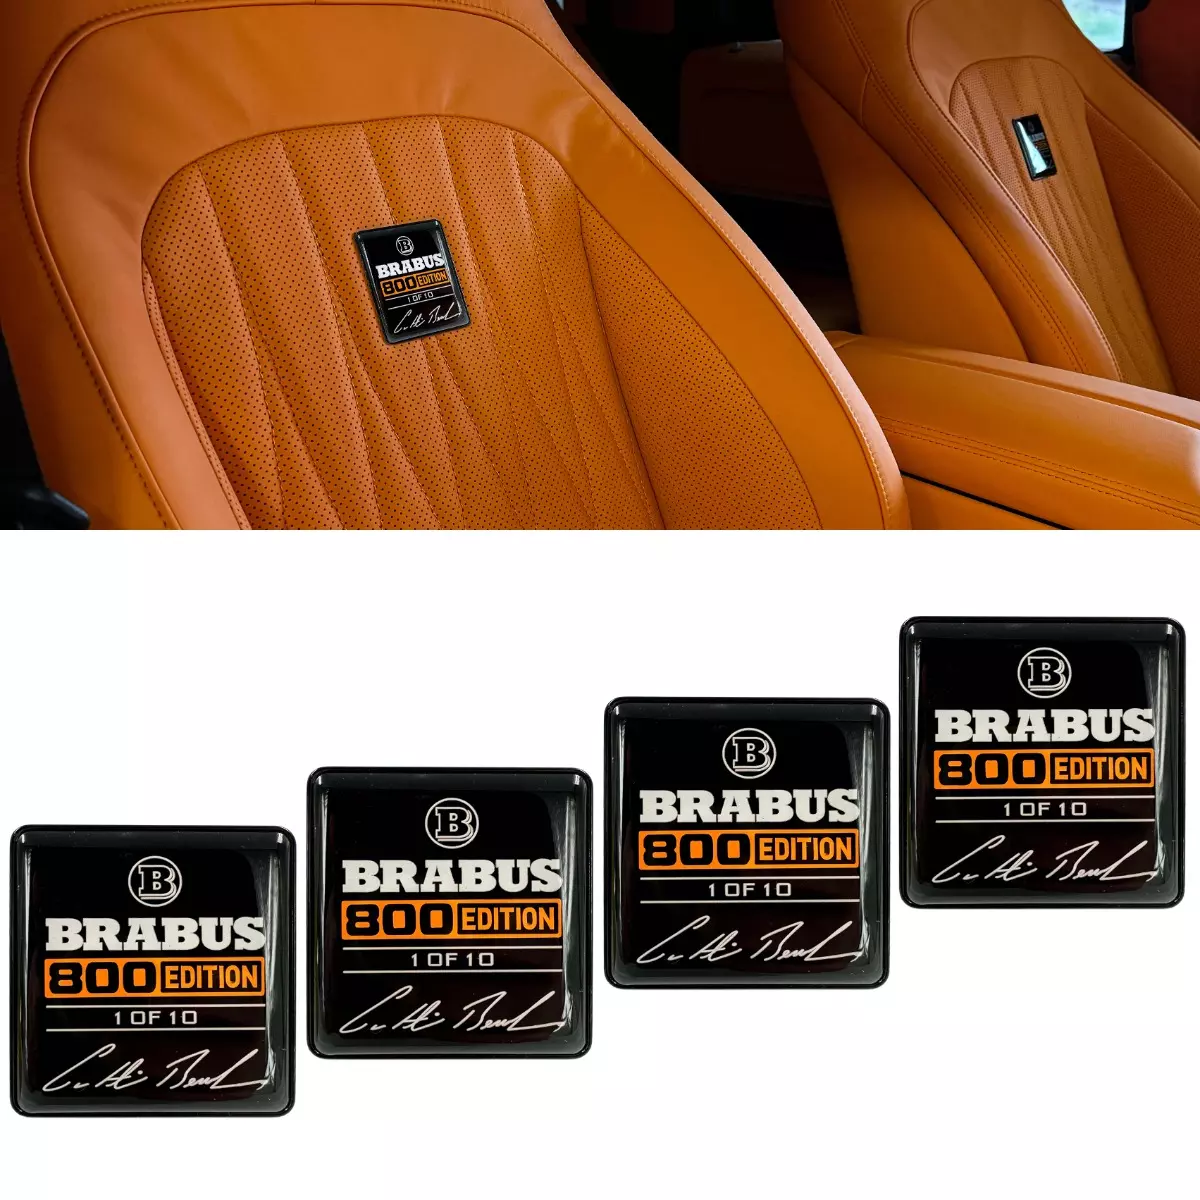 Brabus 800 Edition 1 of 10 Orange Seat Emblems Set for Mercedes-Benz W463A